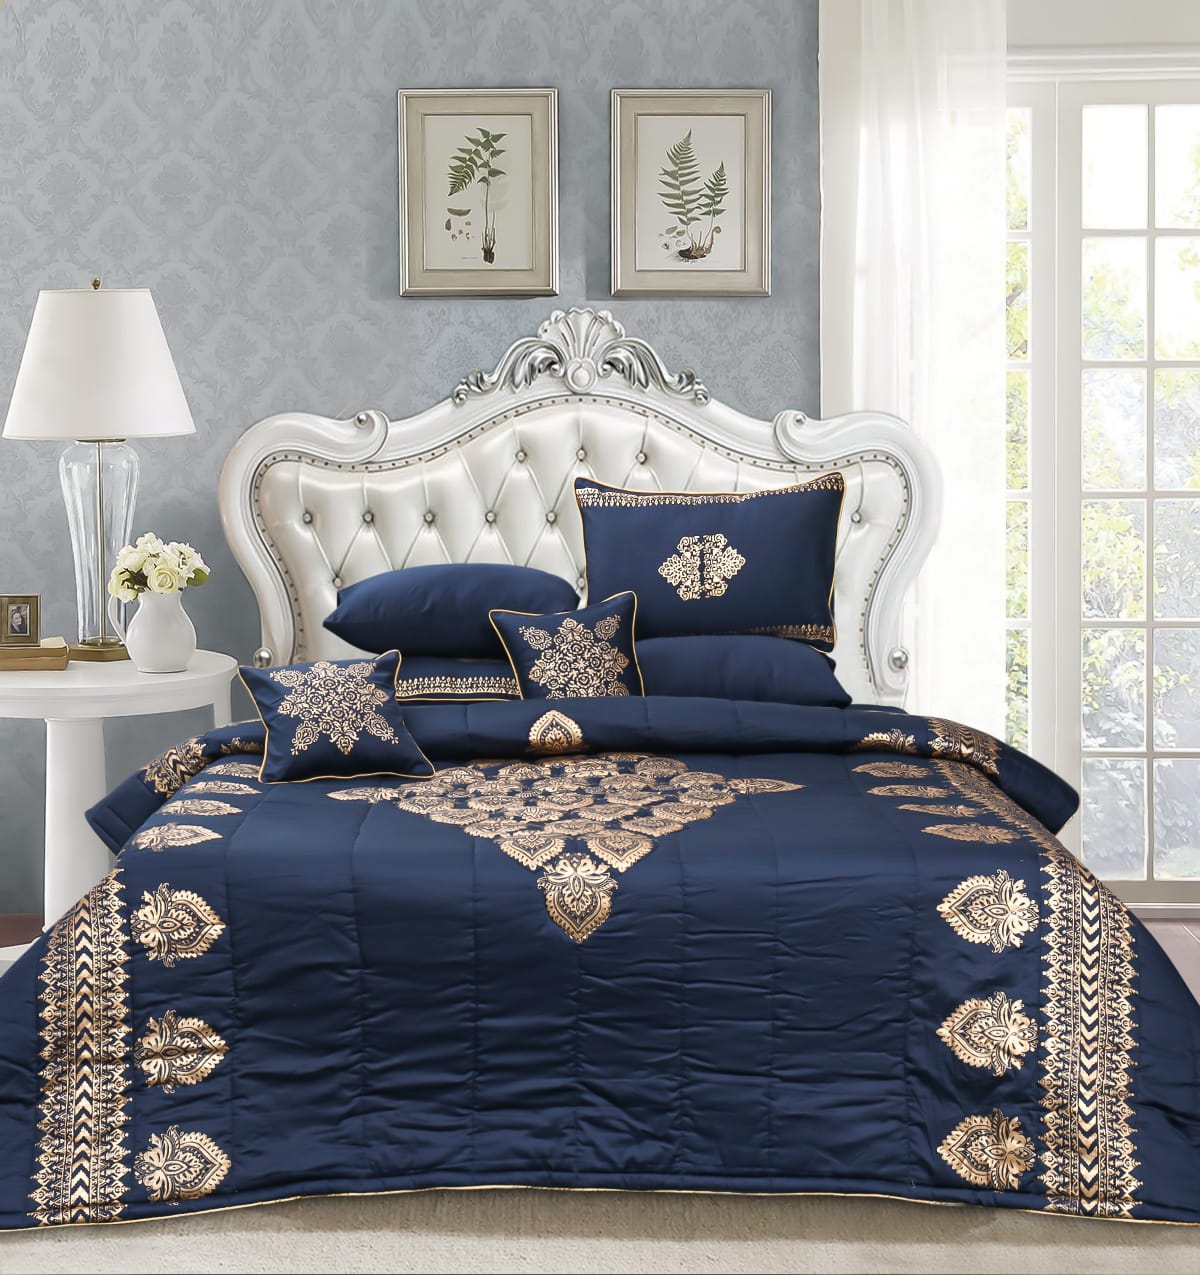 8 Pcs Bridal Bed Sheet Comforter Set Cotton Sateen Block Printed – Blue